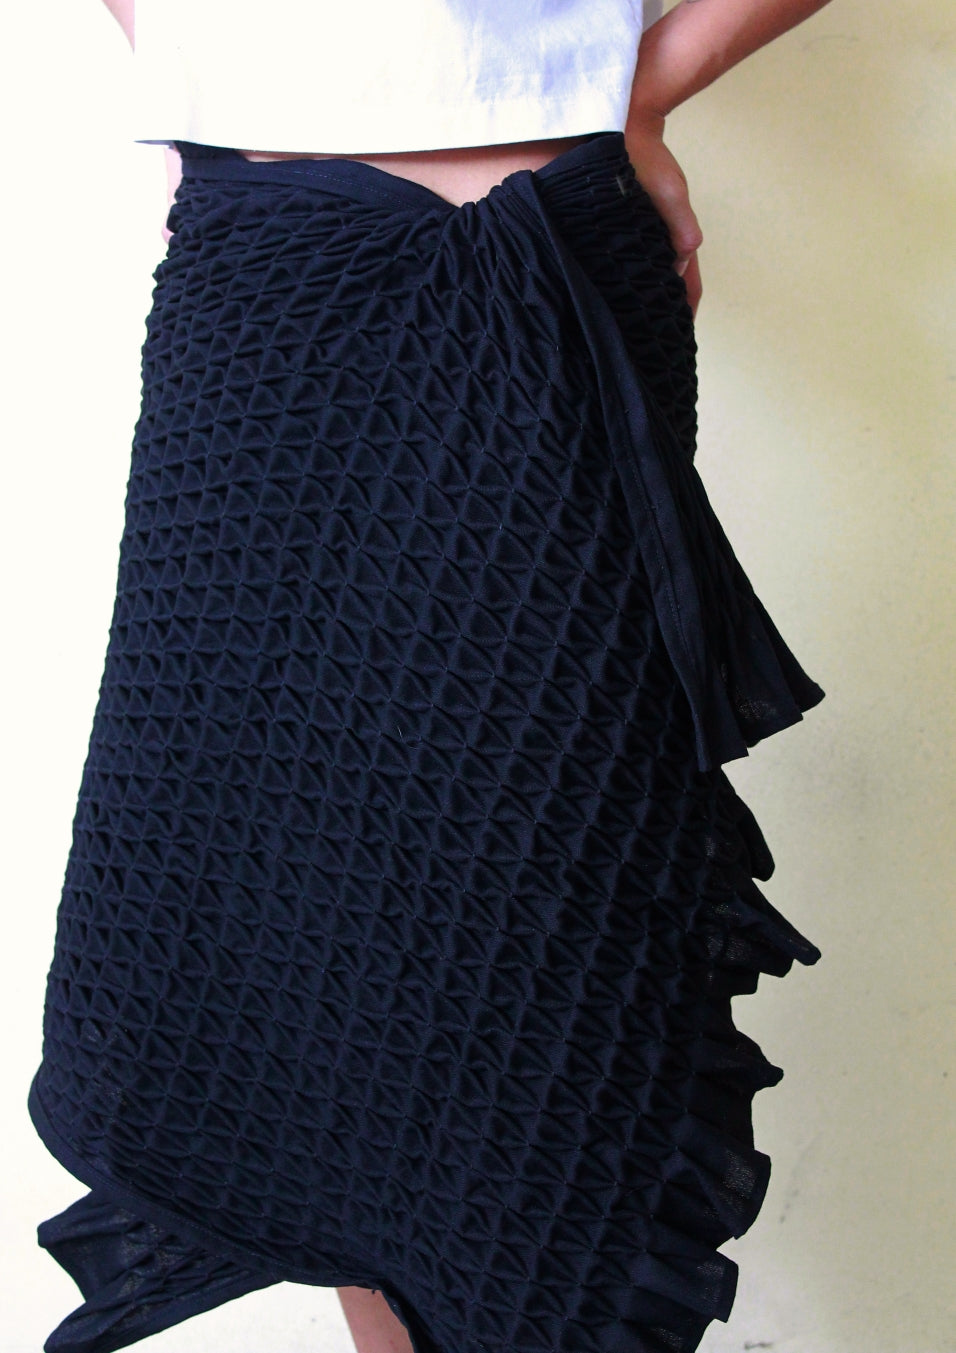 honeycomb shawl - black